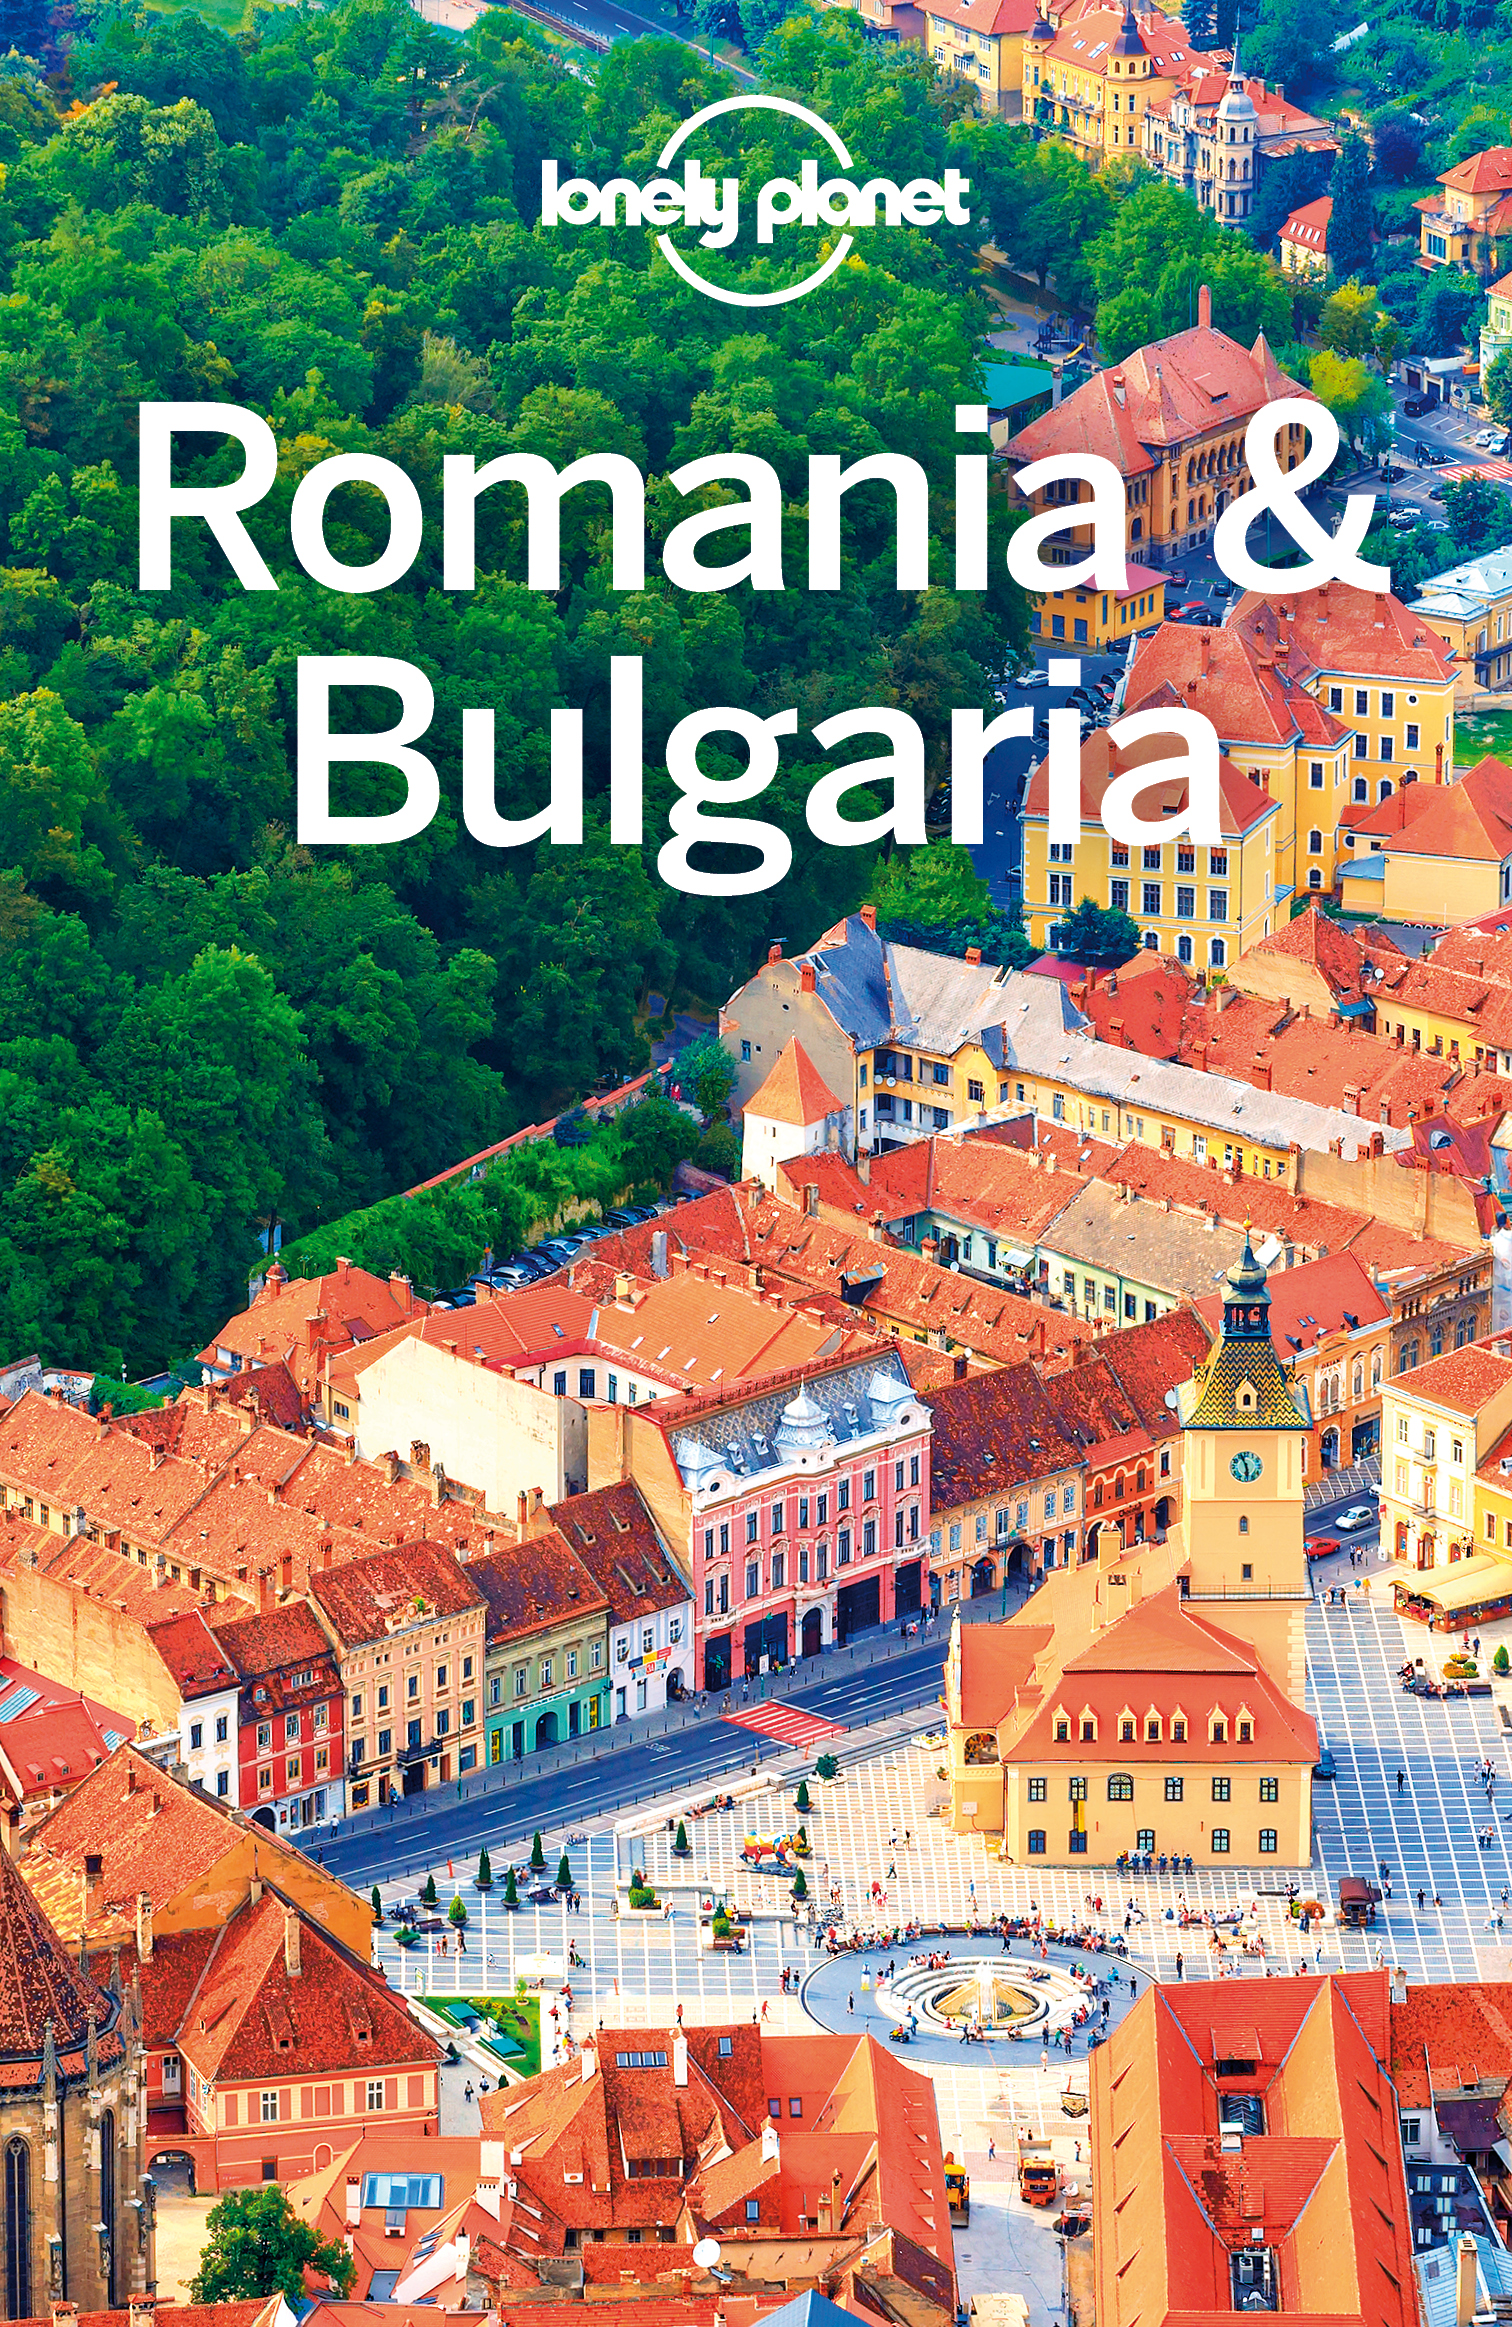 Romania Bulgaria - image 1